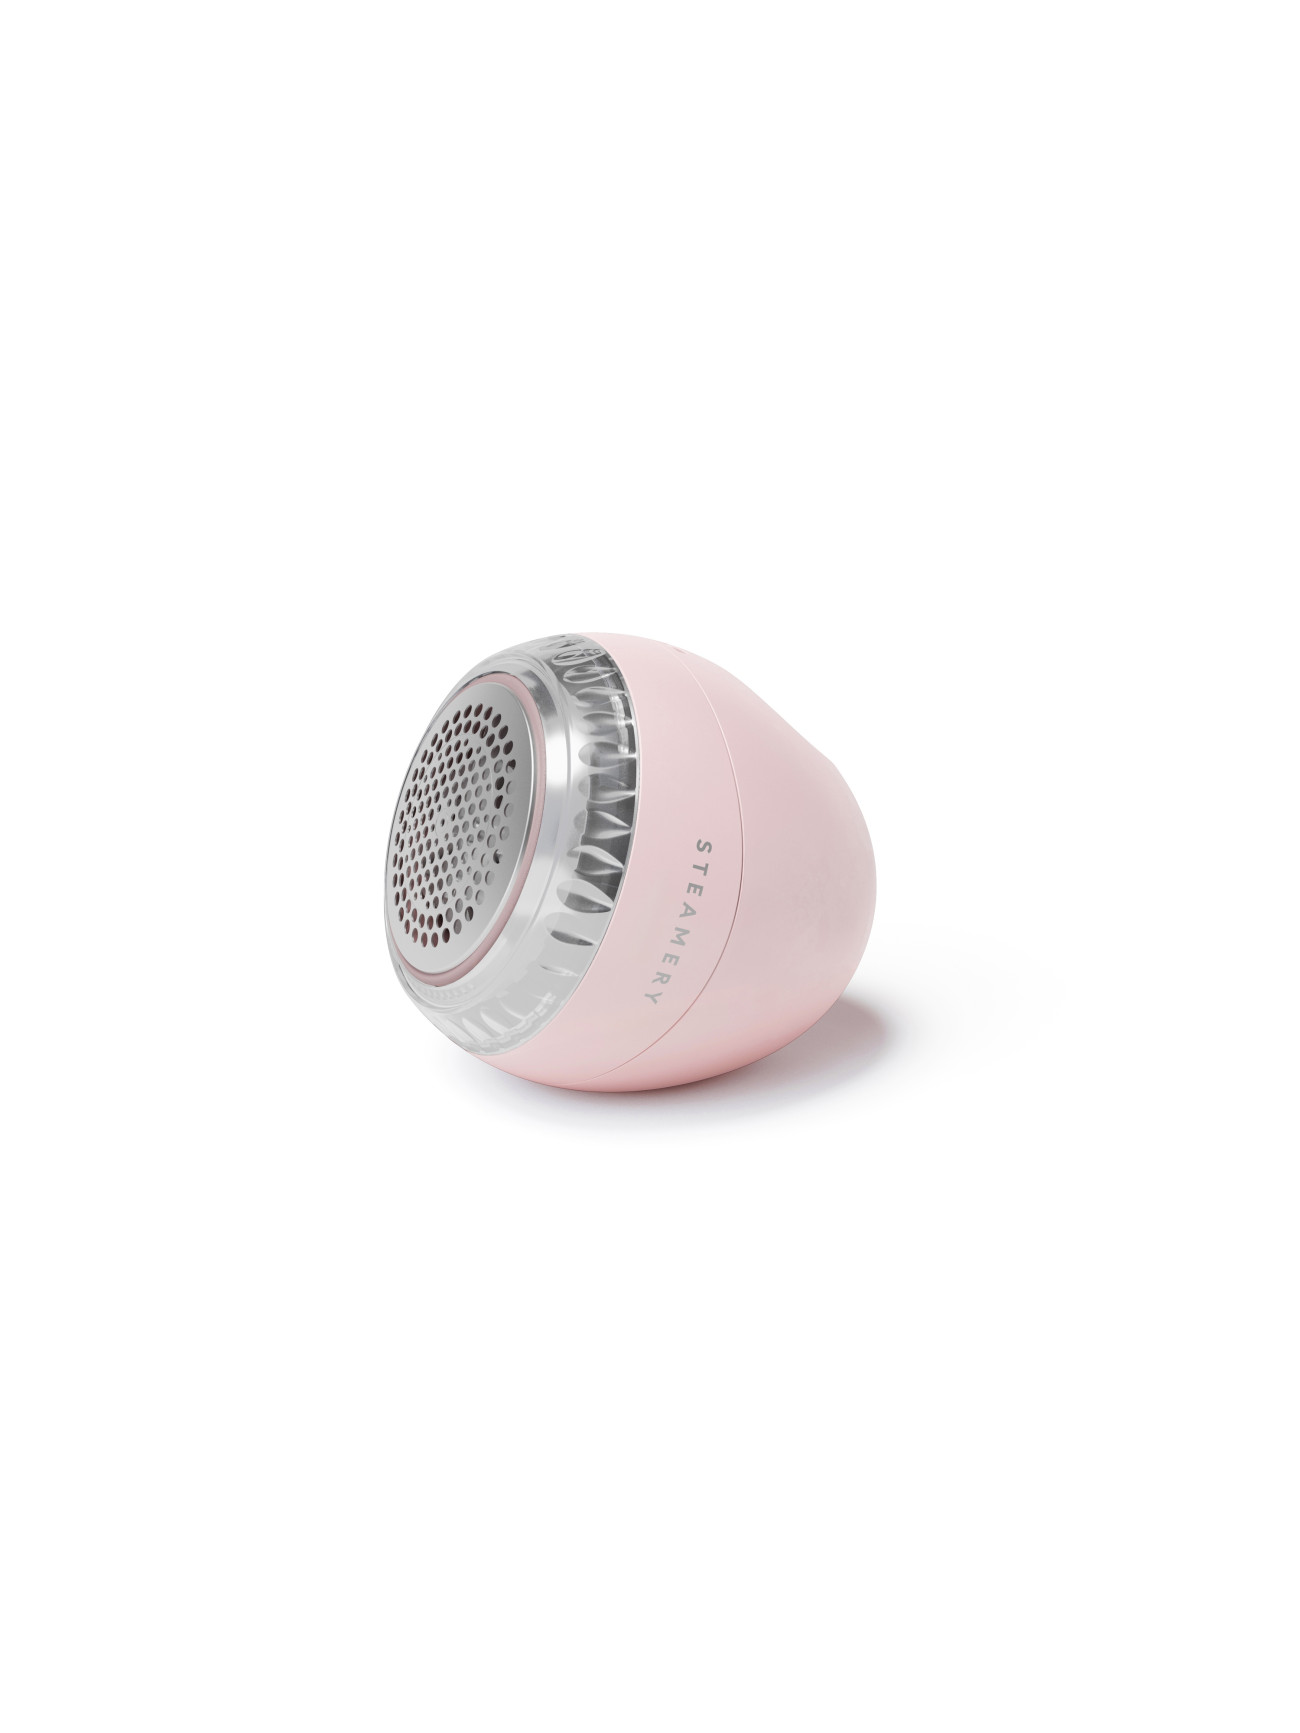 Pilo 1 Fabric Shaver – Pink